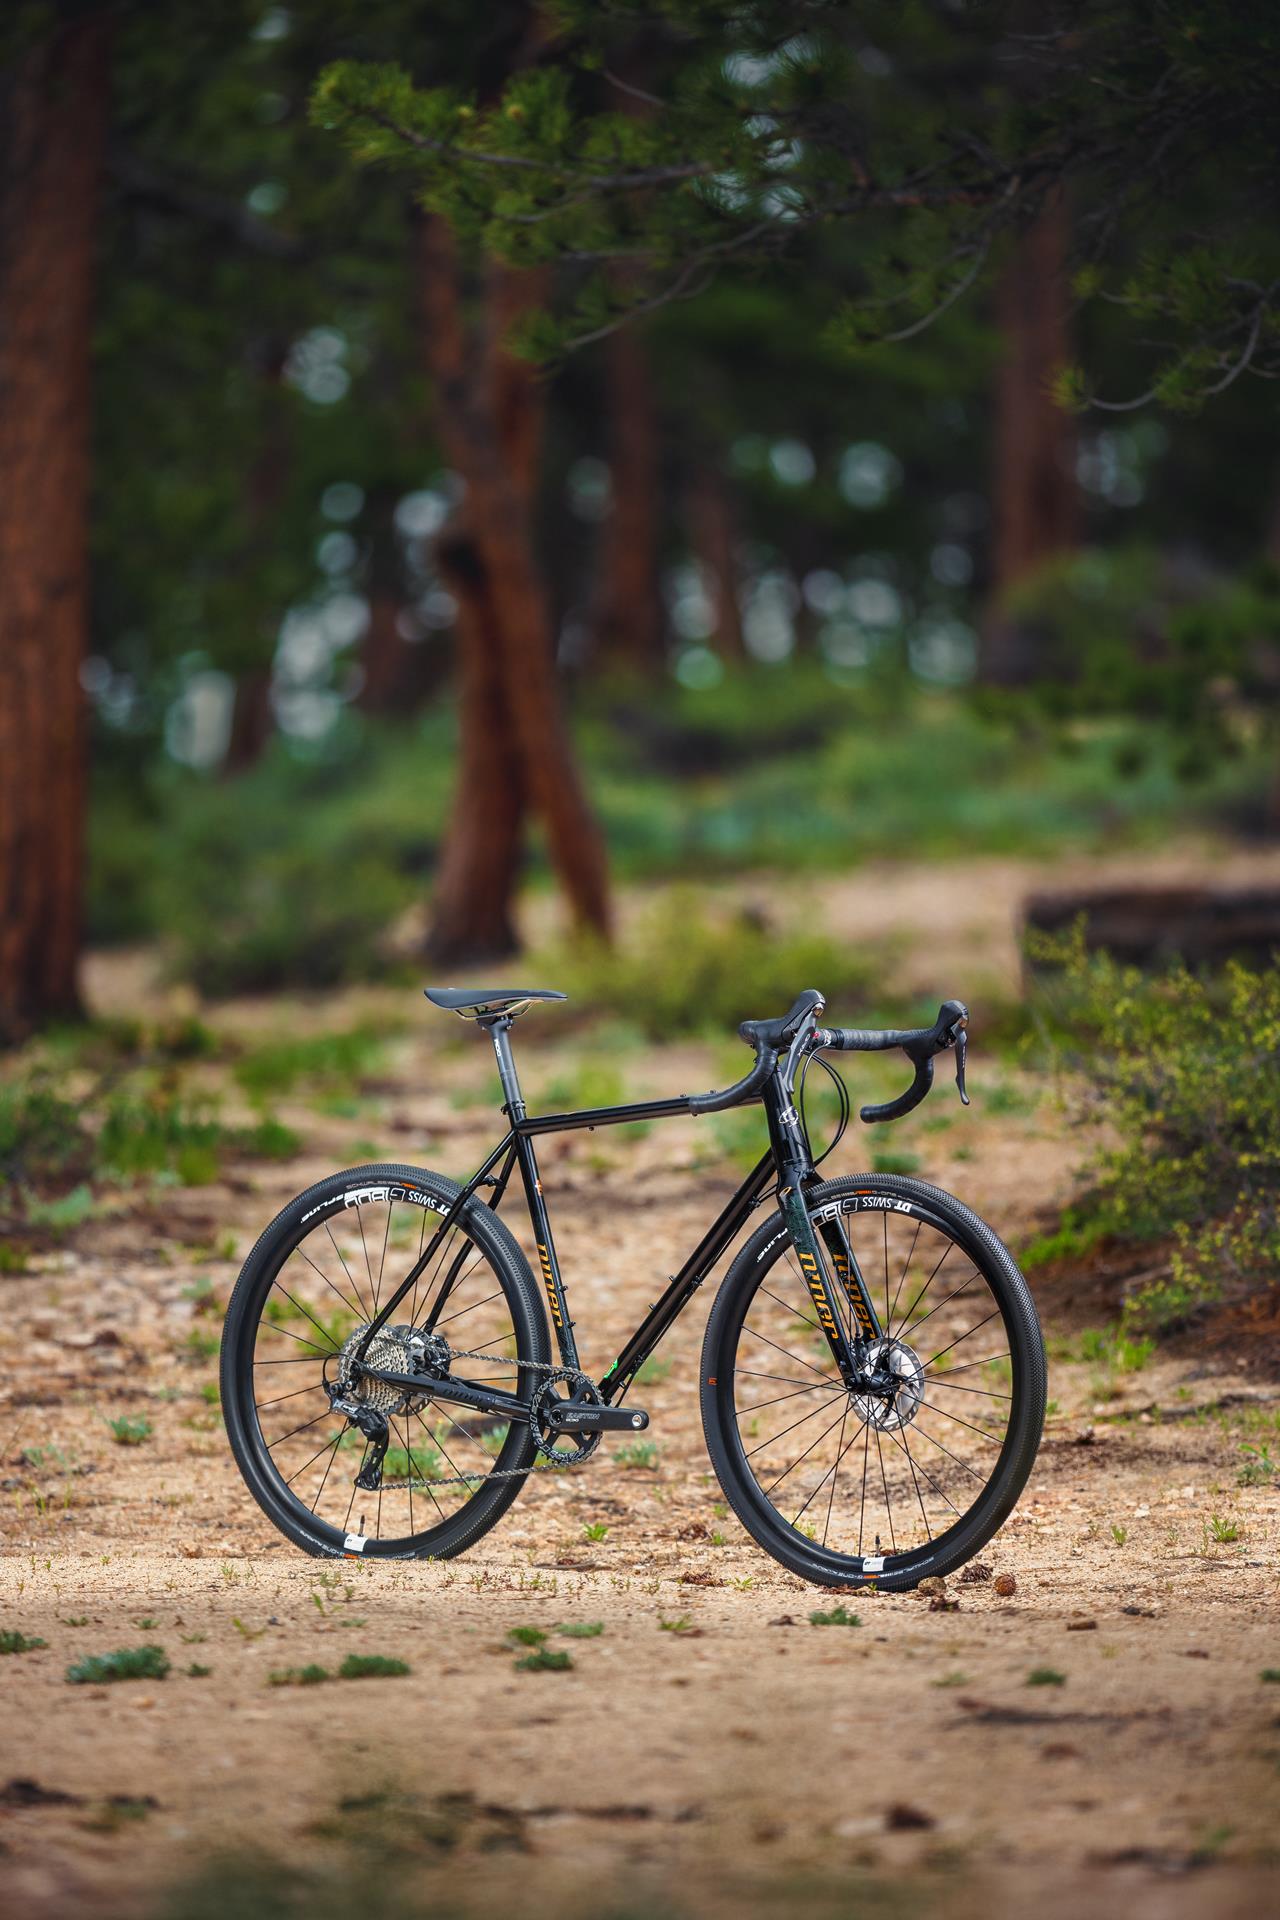 Niner RLT Steel 2-star velosipēds, smaragdzaļš, 56